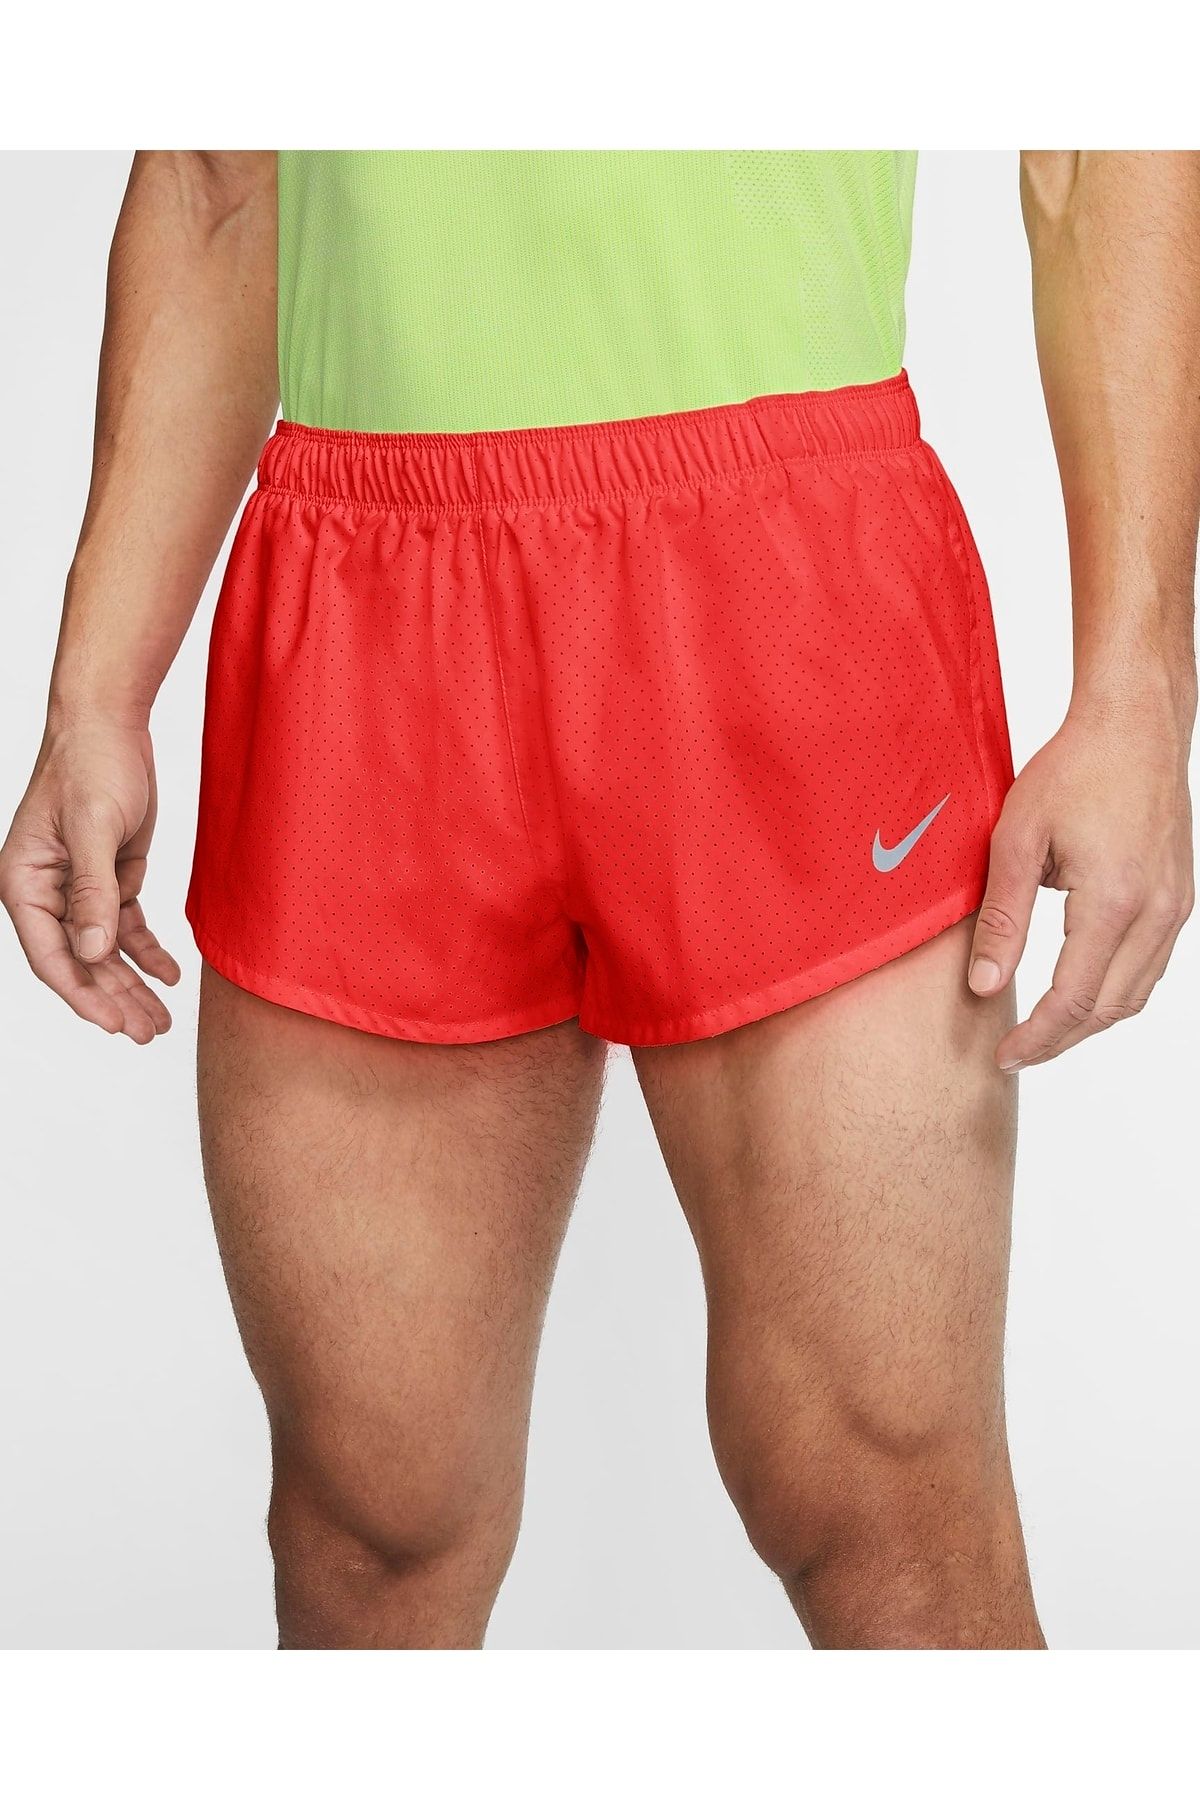 Nike Fast 5 Cm Men's Running Shorts Cj7845-635 - Trendyol